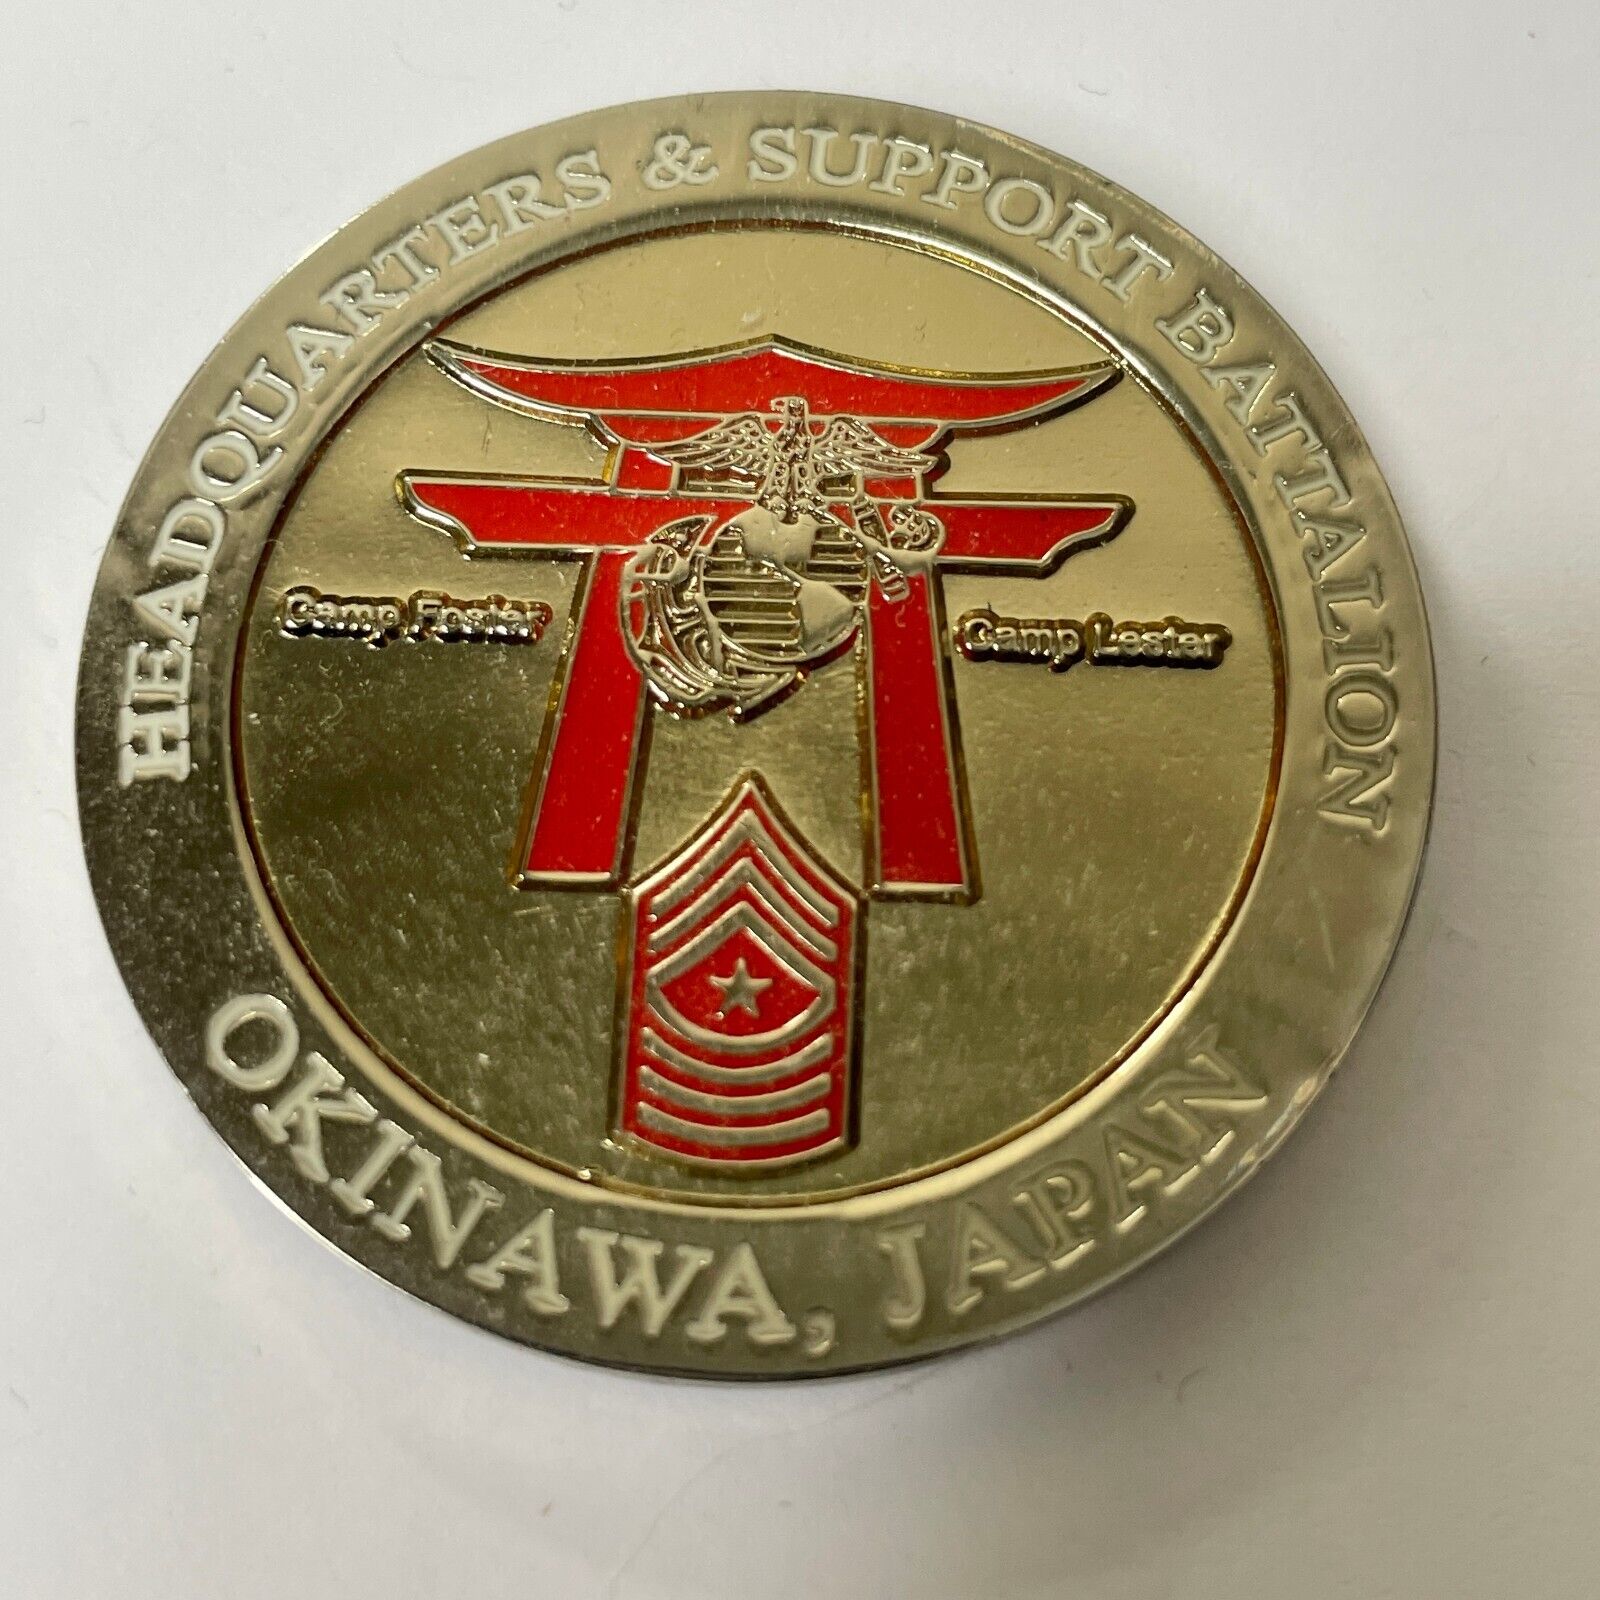 Headquarters & Support Battalion, Okinawa SgtMaj Challenge Coin 1.75